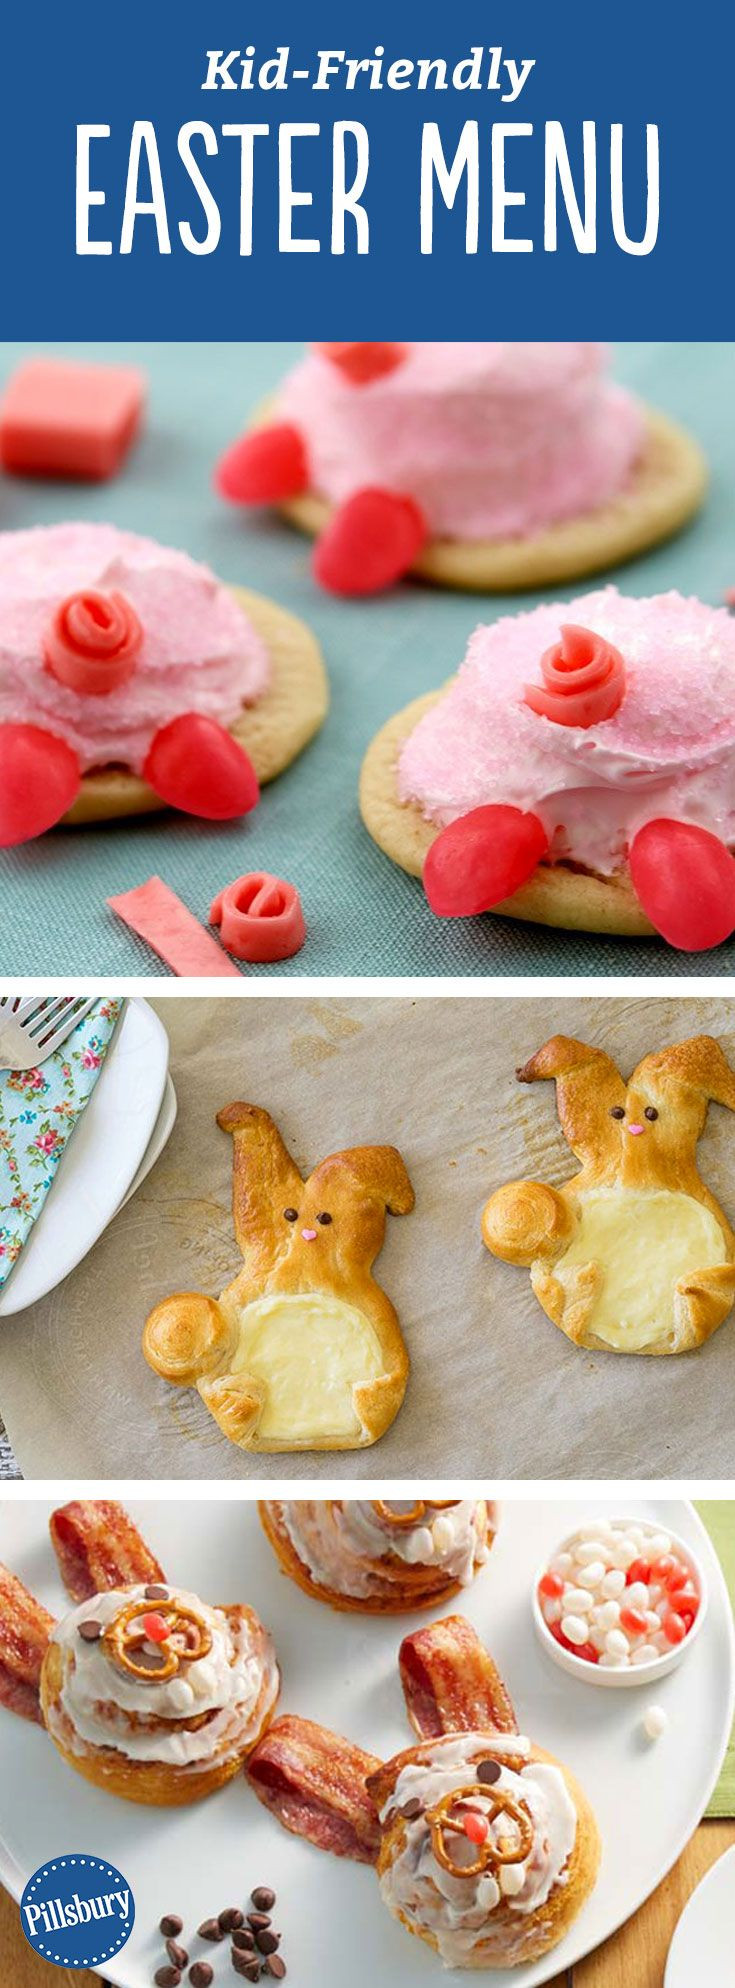 Best Easter Dinner Menu Ideas
 17 Best images about Easter Recipes on Pinterest